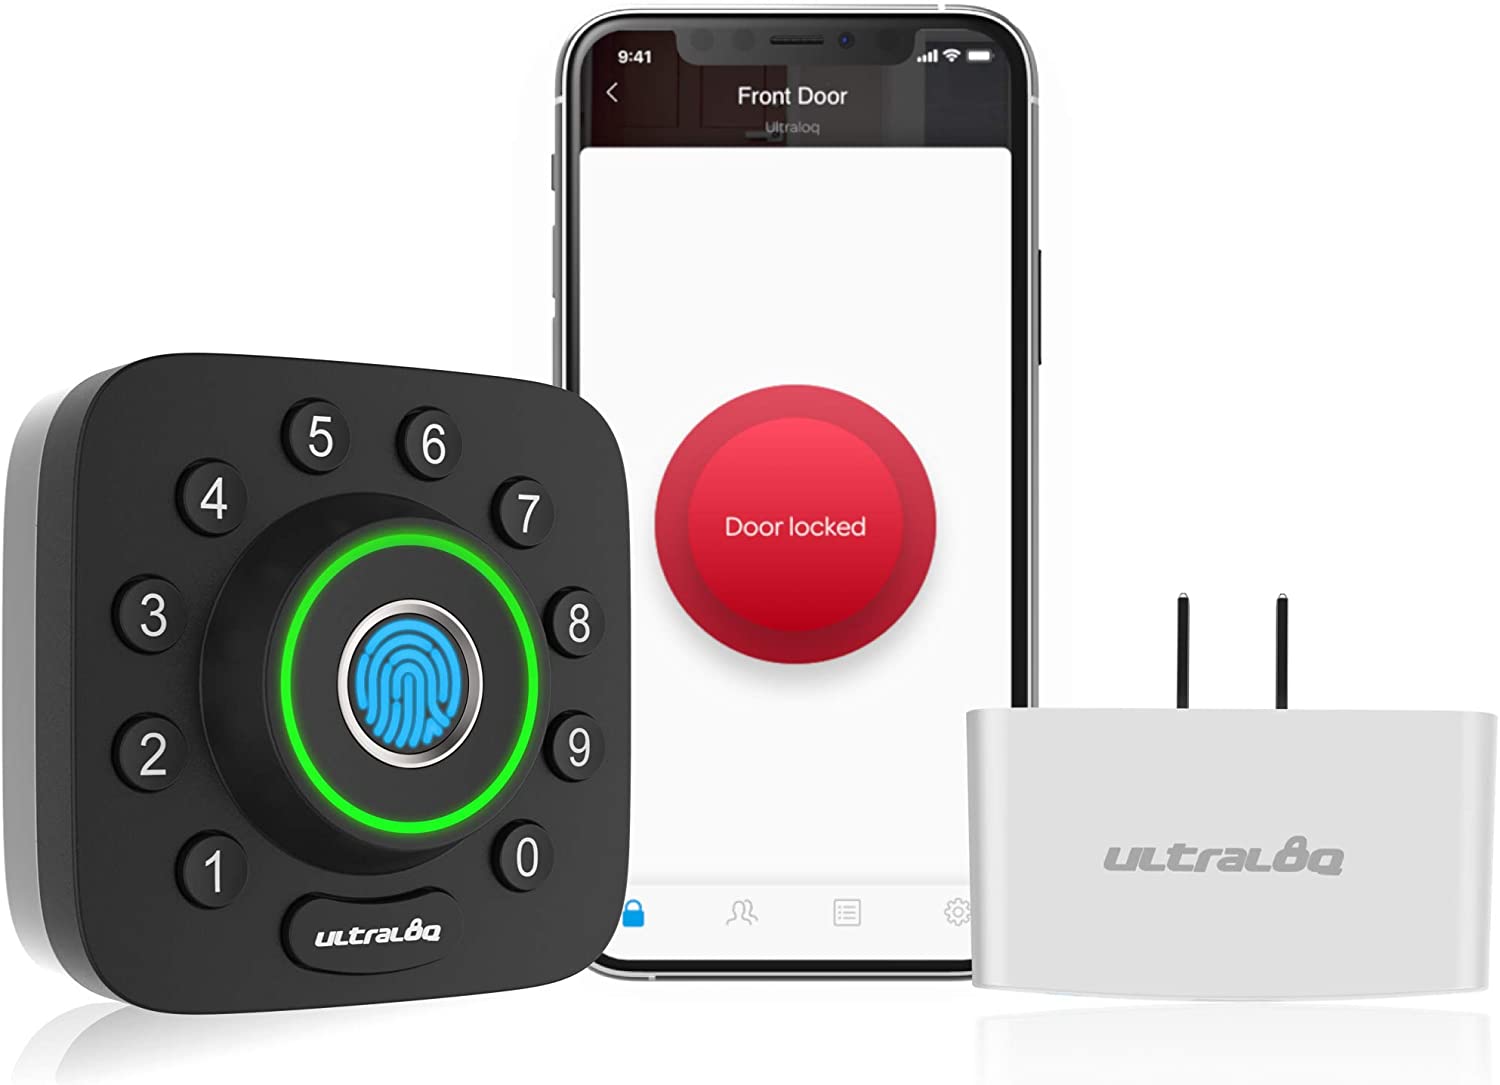 Ultraloq - U-Bolt Pro + Bridge WiFi Adaptor, 6-in-1 Keyless Entry Door Lock with WiFi, Bluetooth, Fingerprint and Keypad